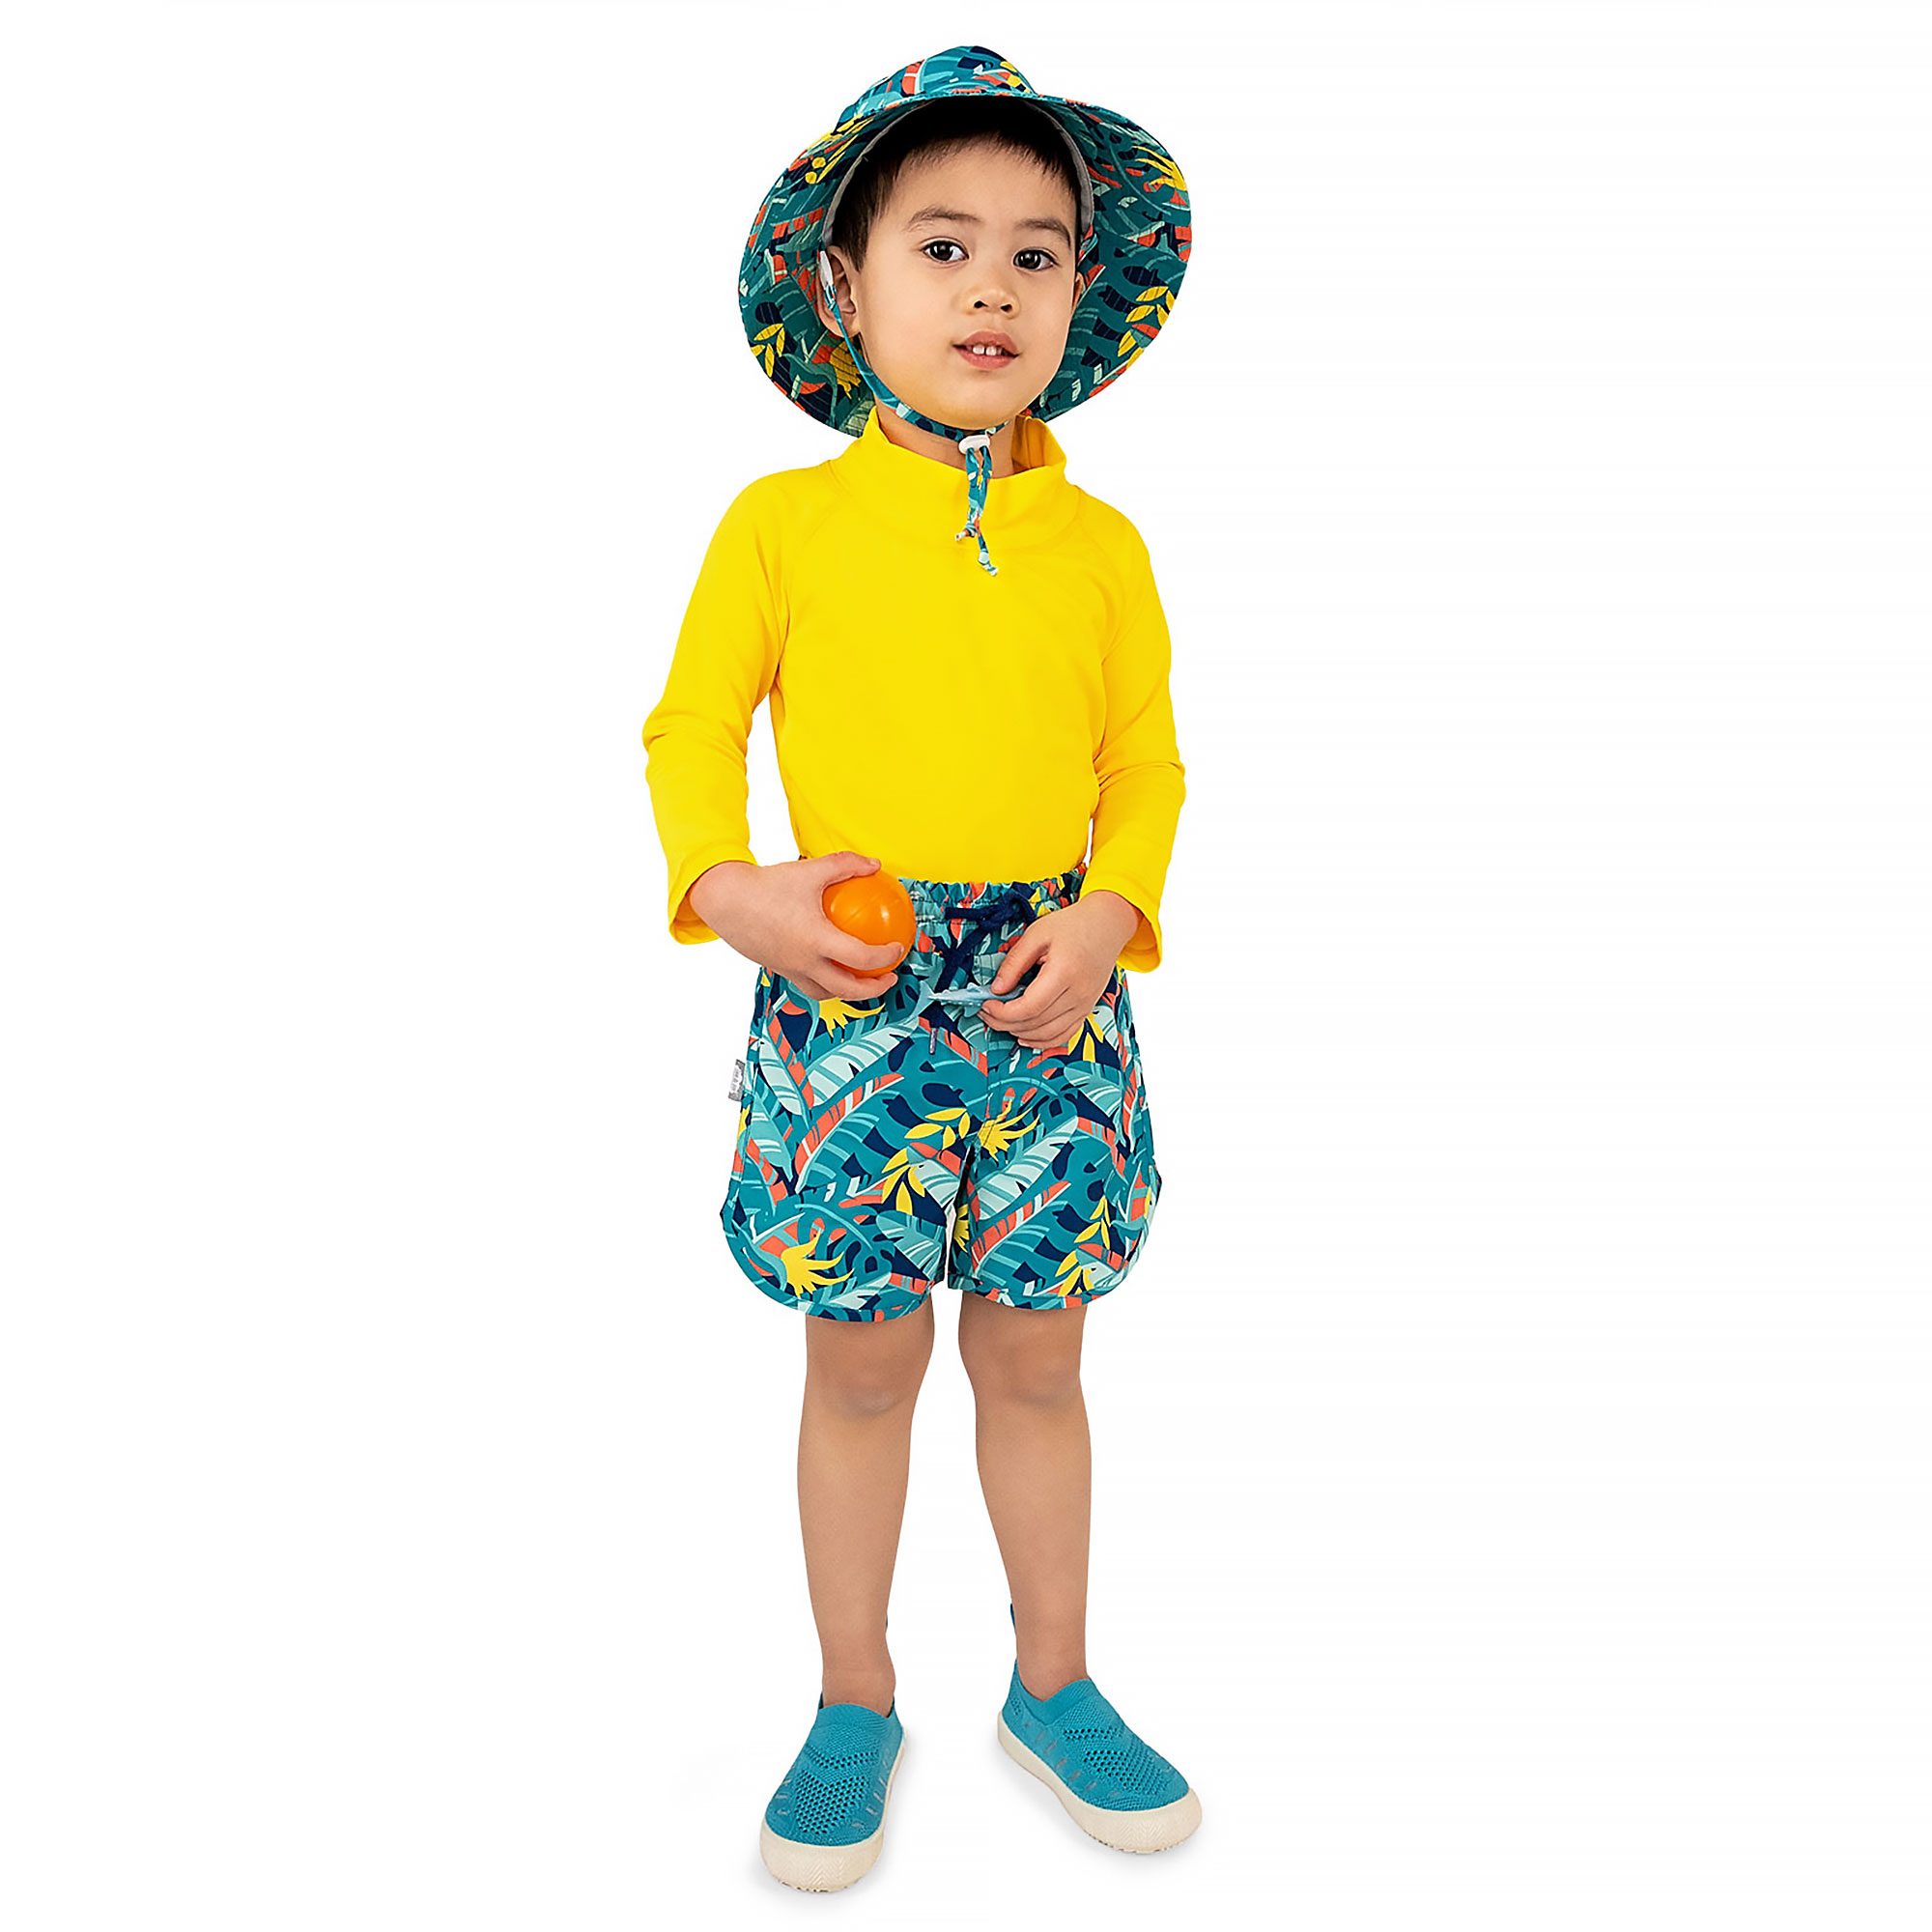 Kids UV Swim Shorts | Tropical